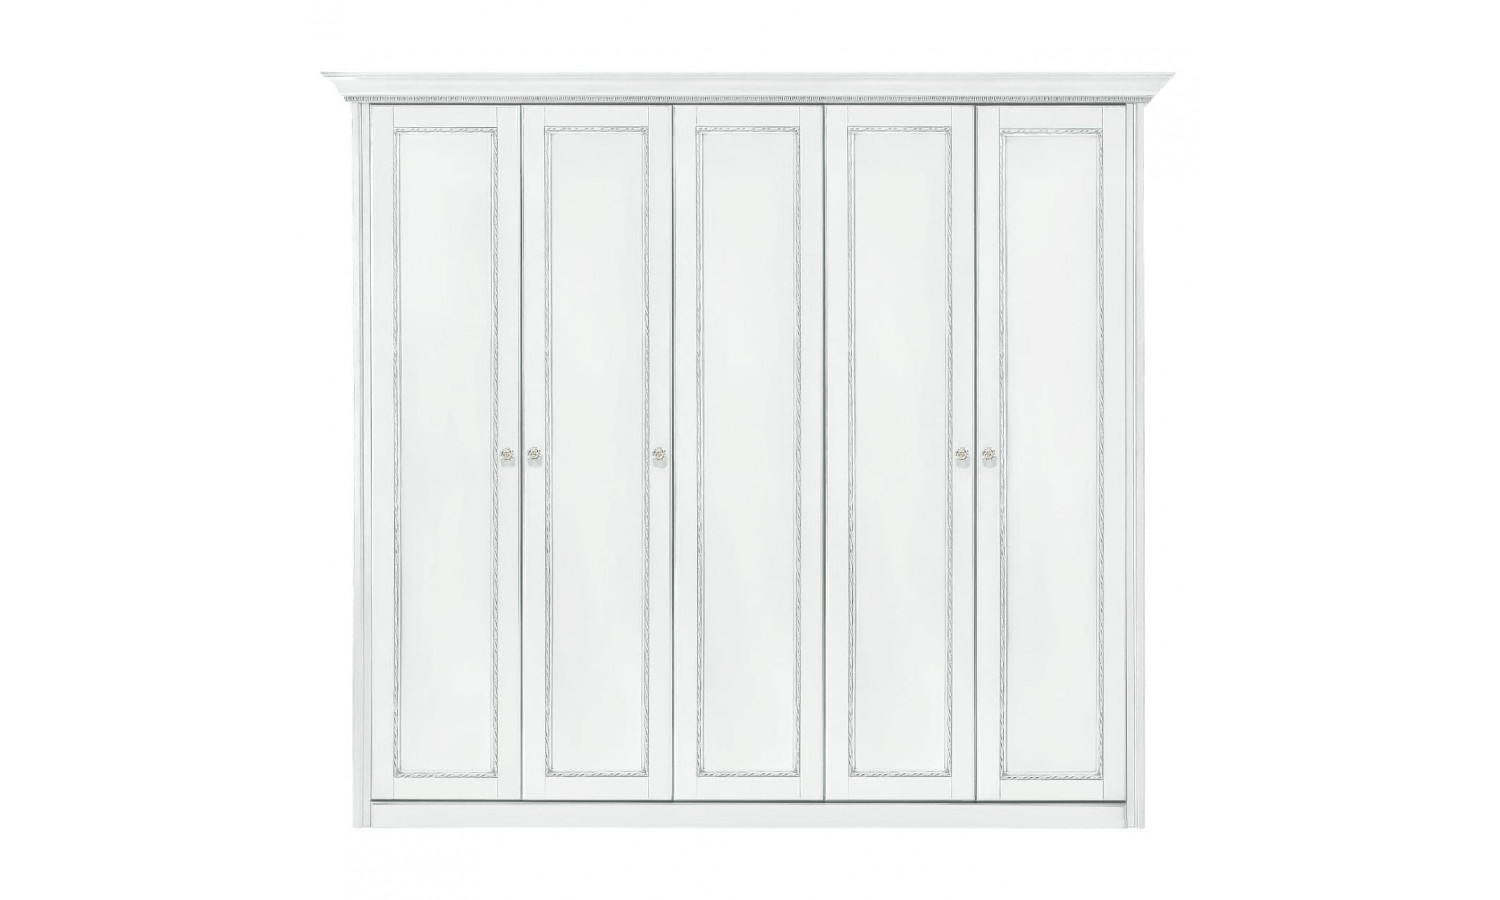 Шкаф 5 дверный Палермо Белый/Патина Серебро со структурой дерева